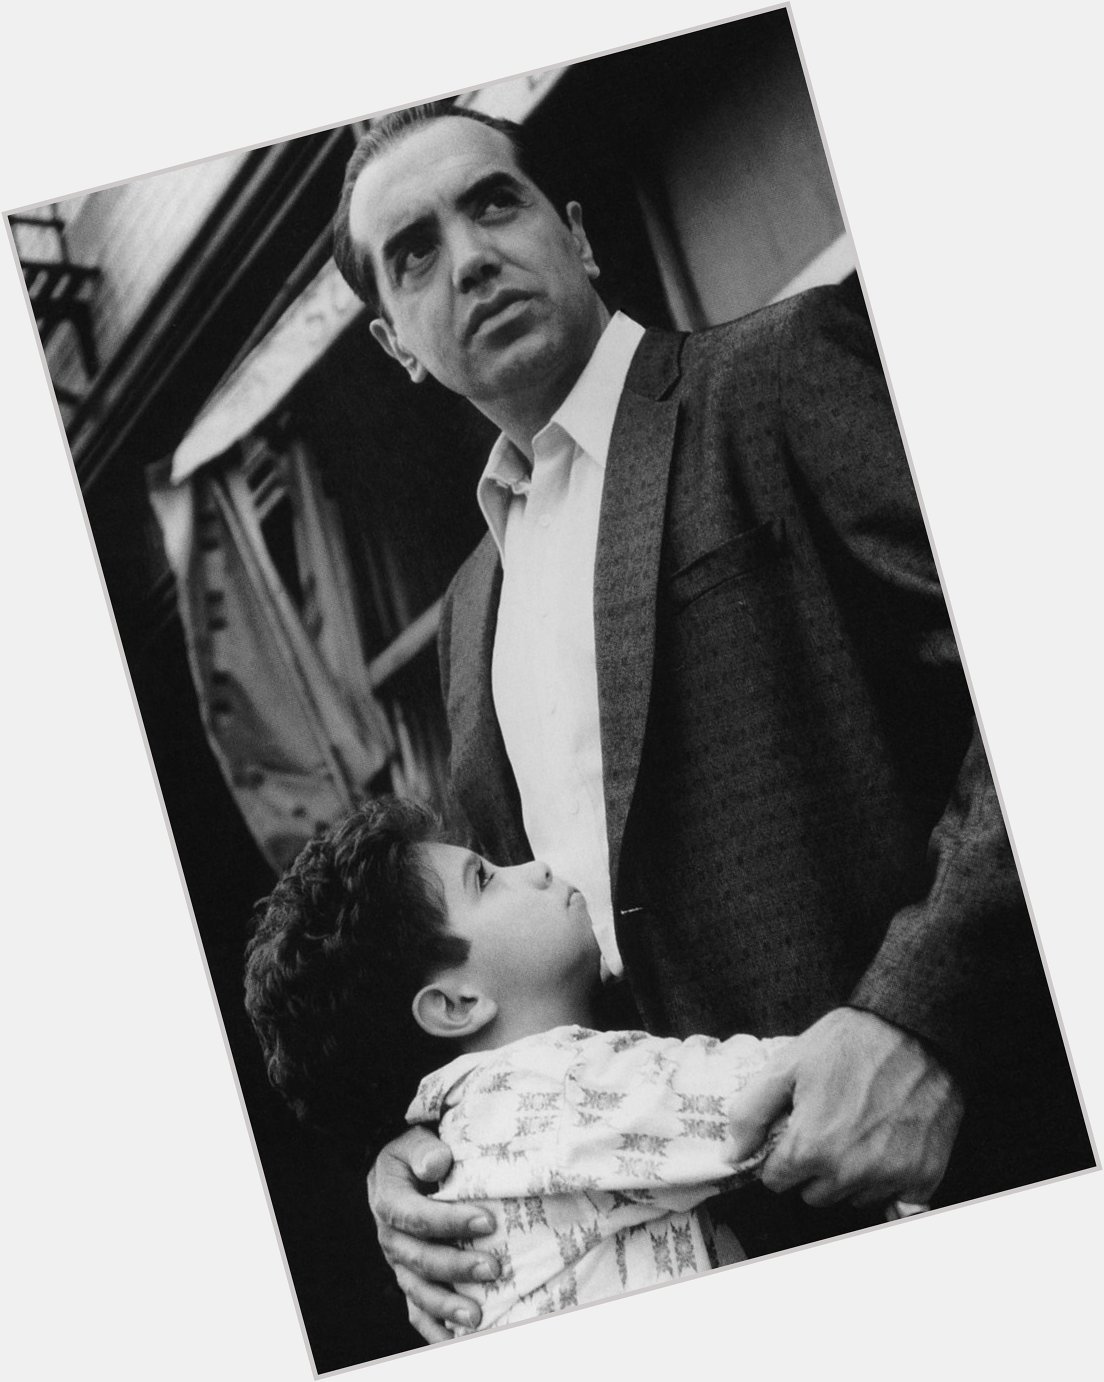 Happy birthday Chazz Palminteri, here with Francis Capra in A Bronx Tale, 1993 